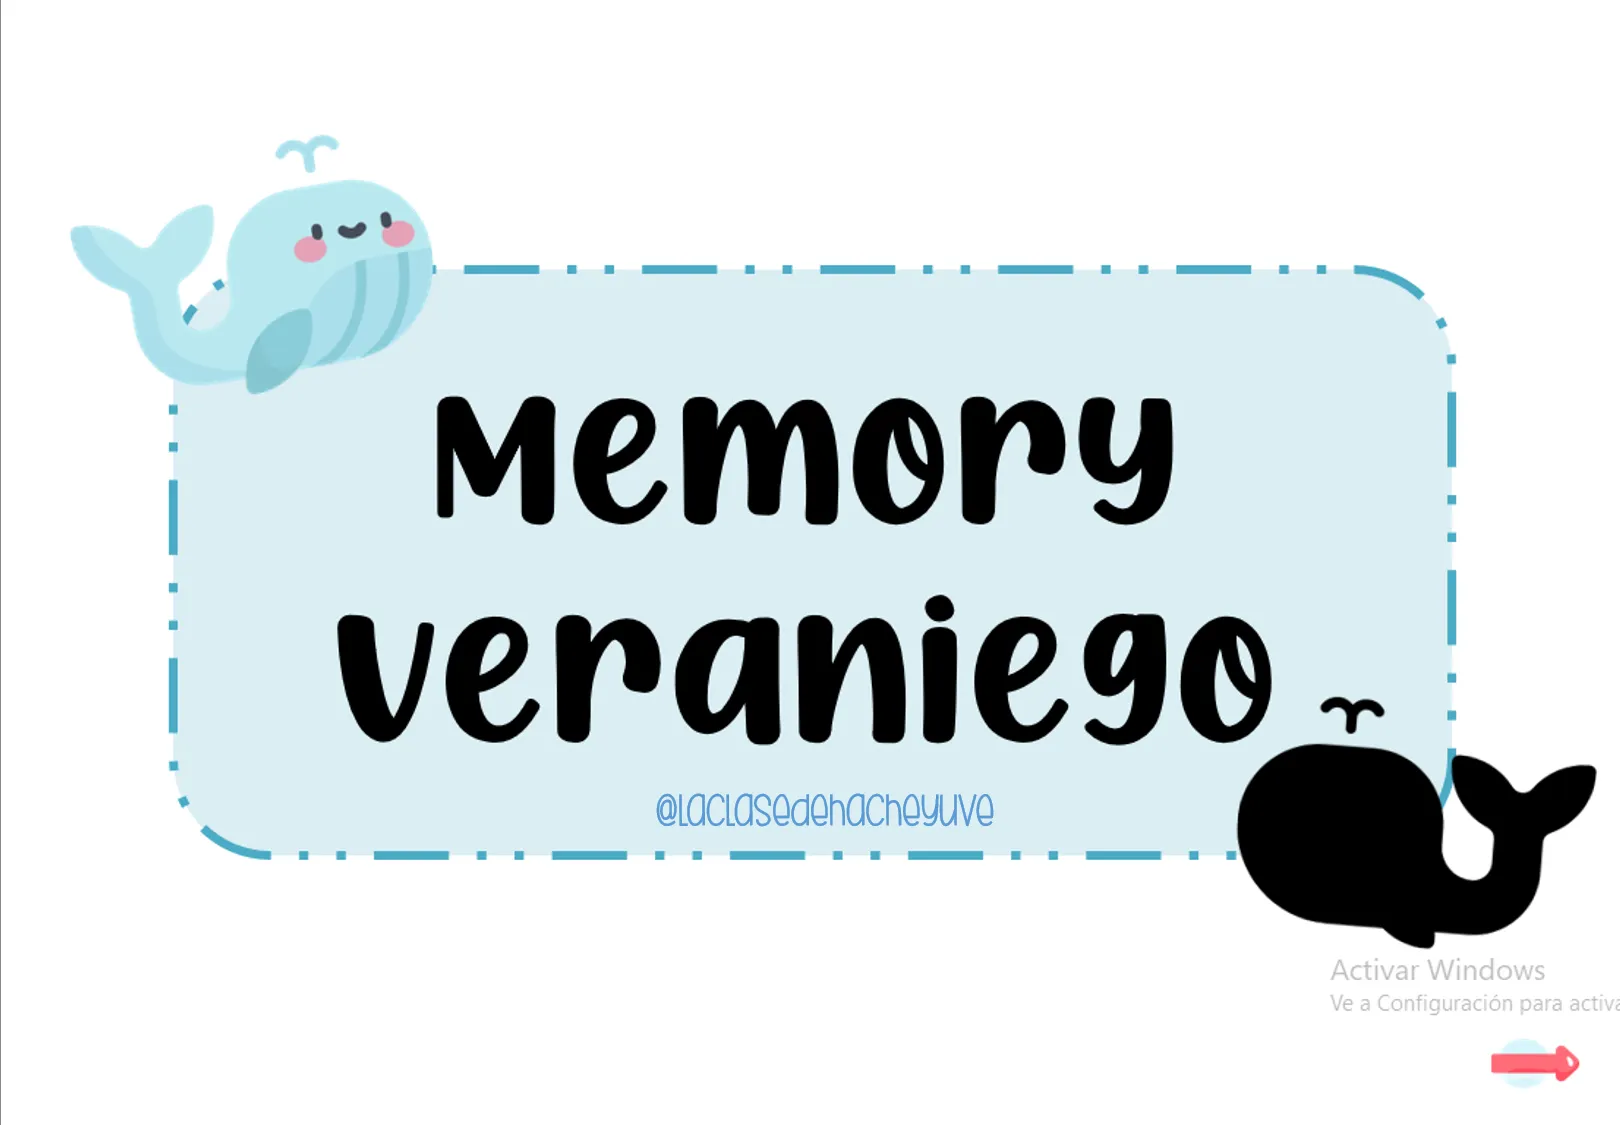 Memory veraniego interactivo